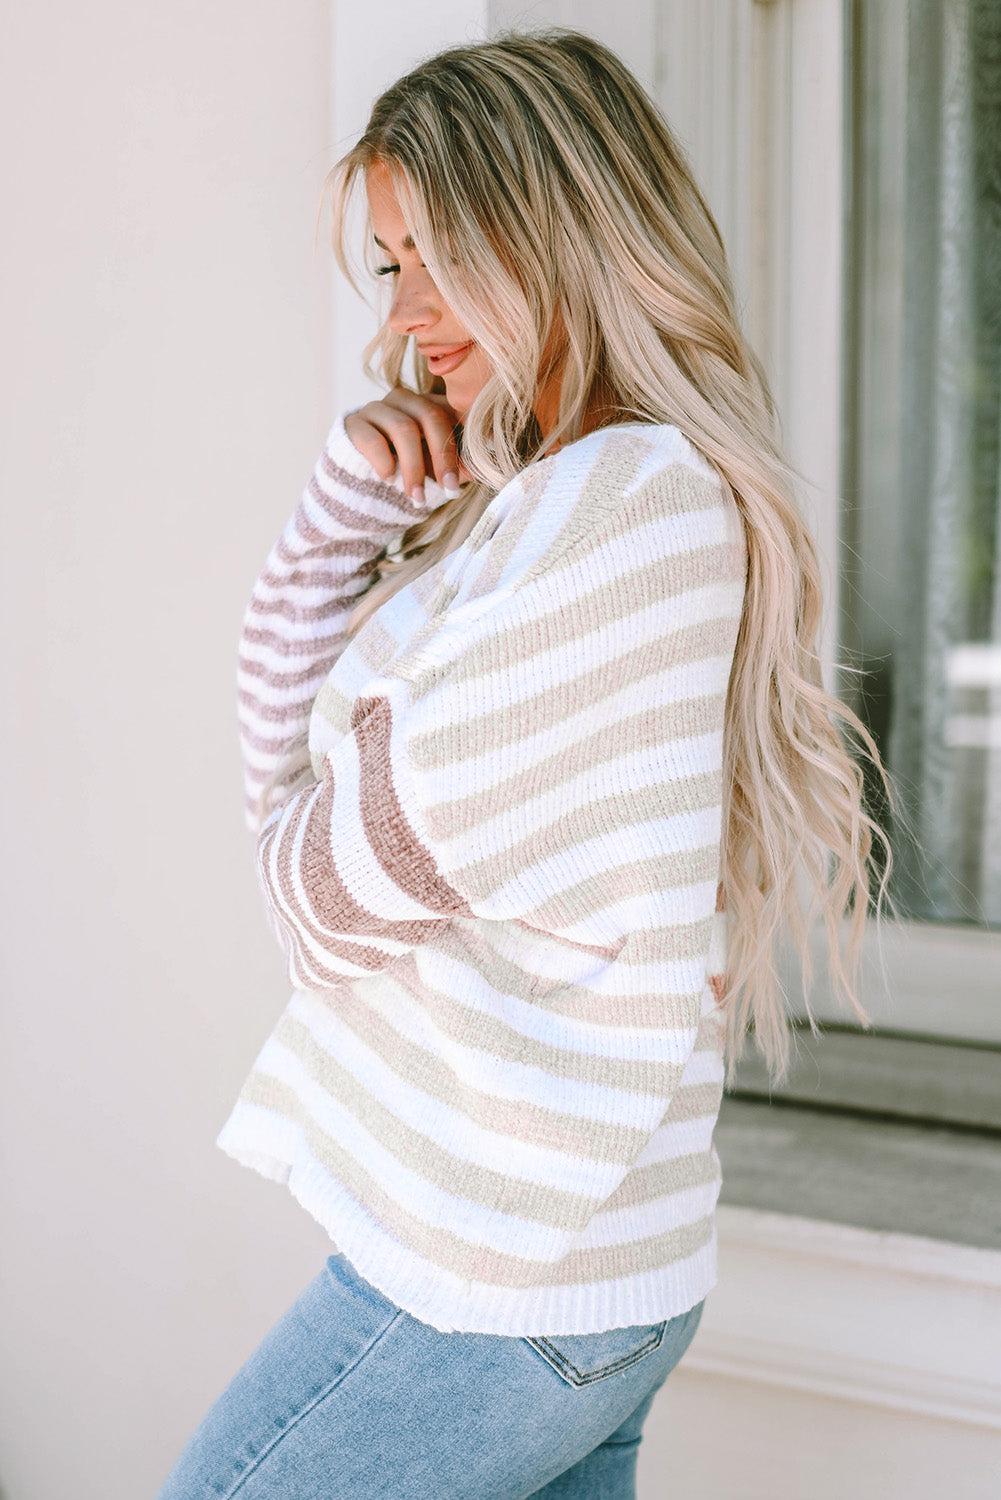 Cali Chic Women Sweater Celebrity Stripe Blocked Drop Shoulder Slouchy